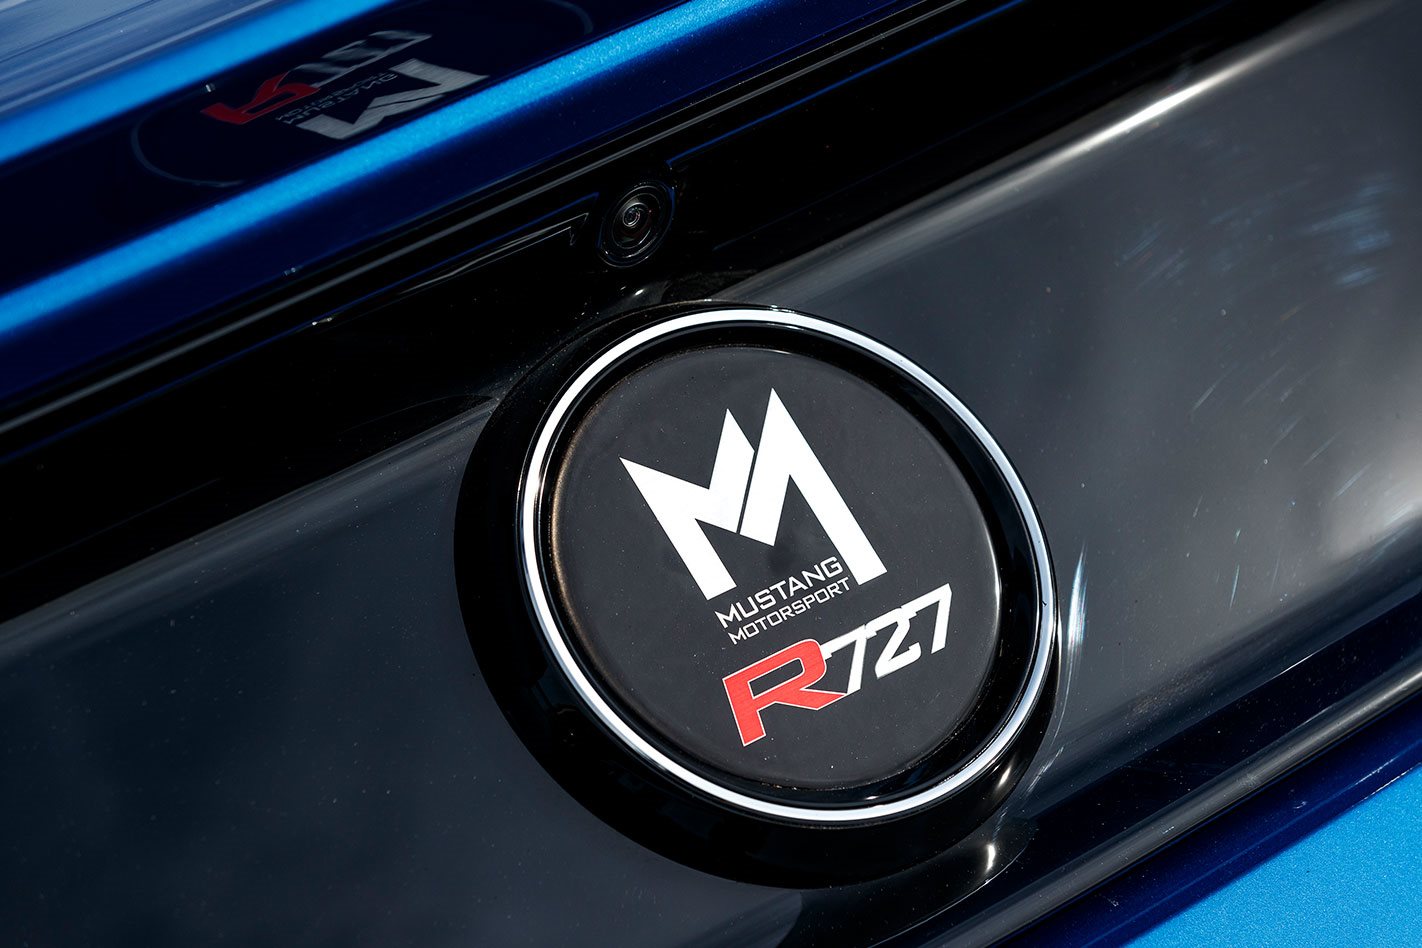 Hot Tuner 2017 Winner Ford Mustang Motorsport MM R727 review